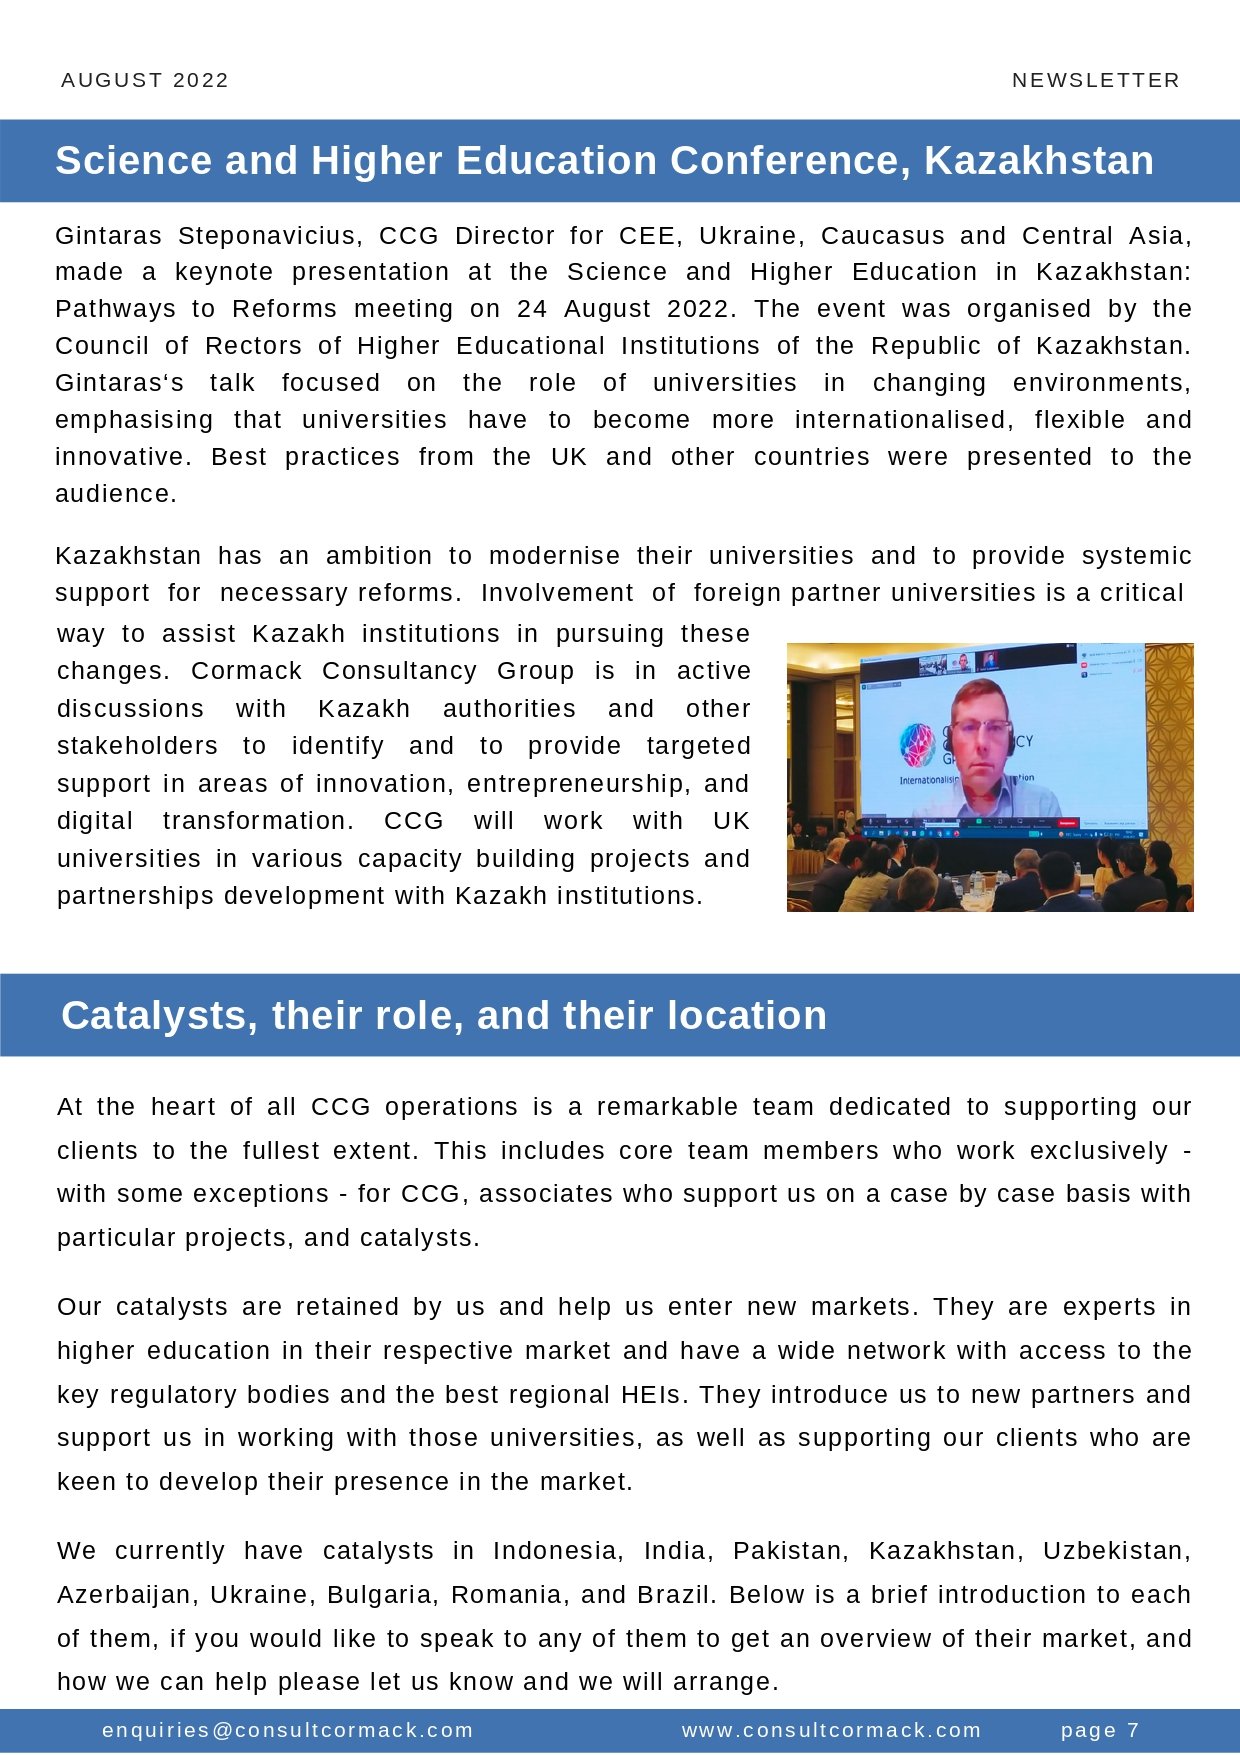 CCG Quarterly Company Newsletter_02.09_v2_page-0007.jpg